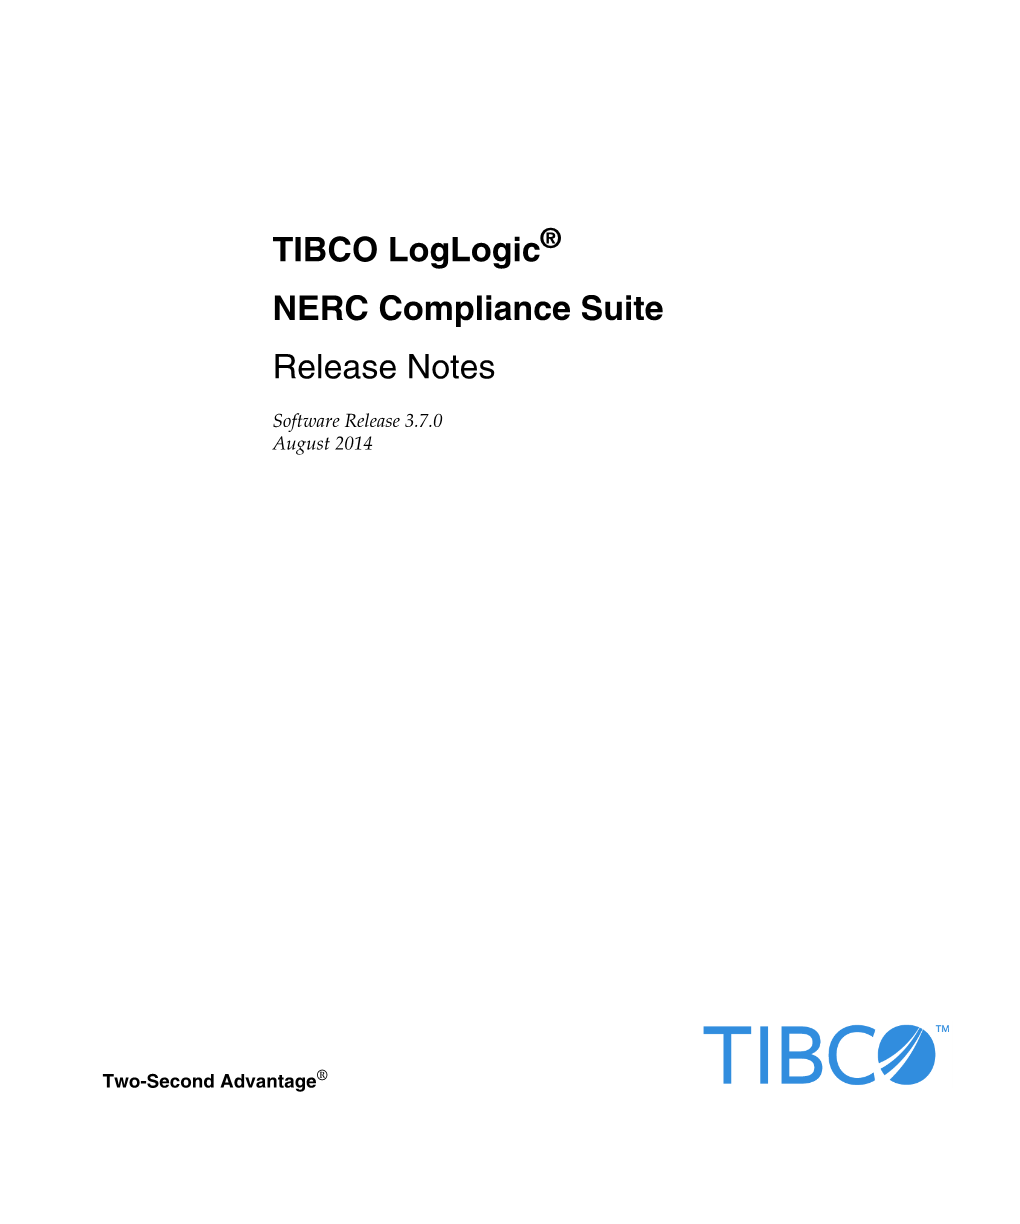 TIBCO Loglogic NERC Compliance Suite Release Notes 4 | Contents